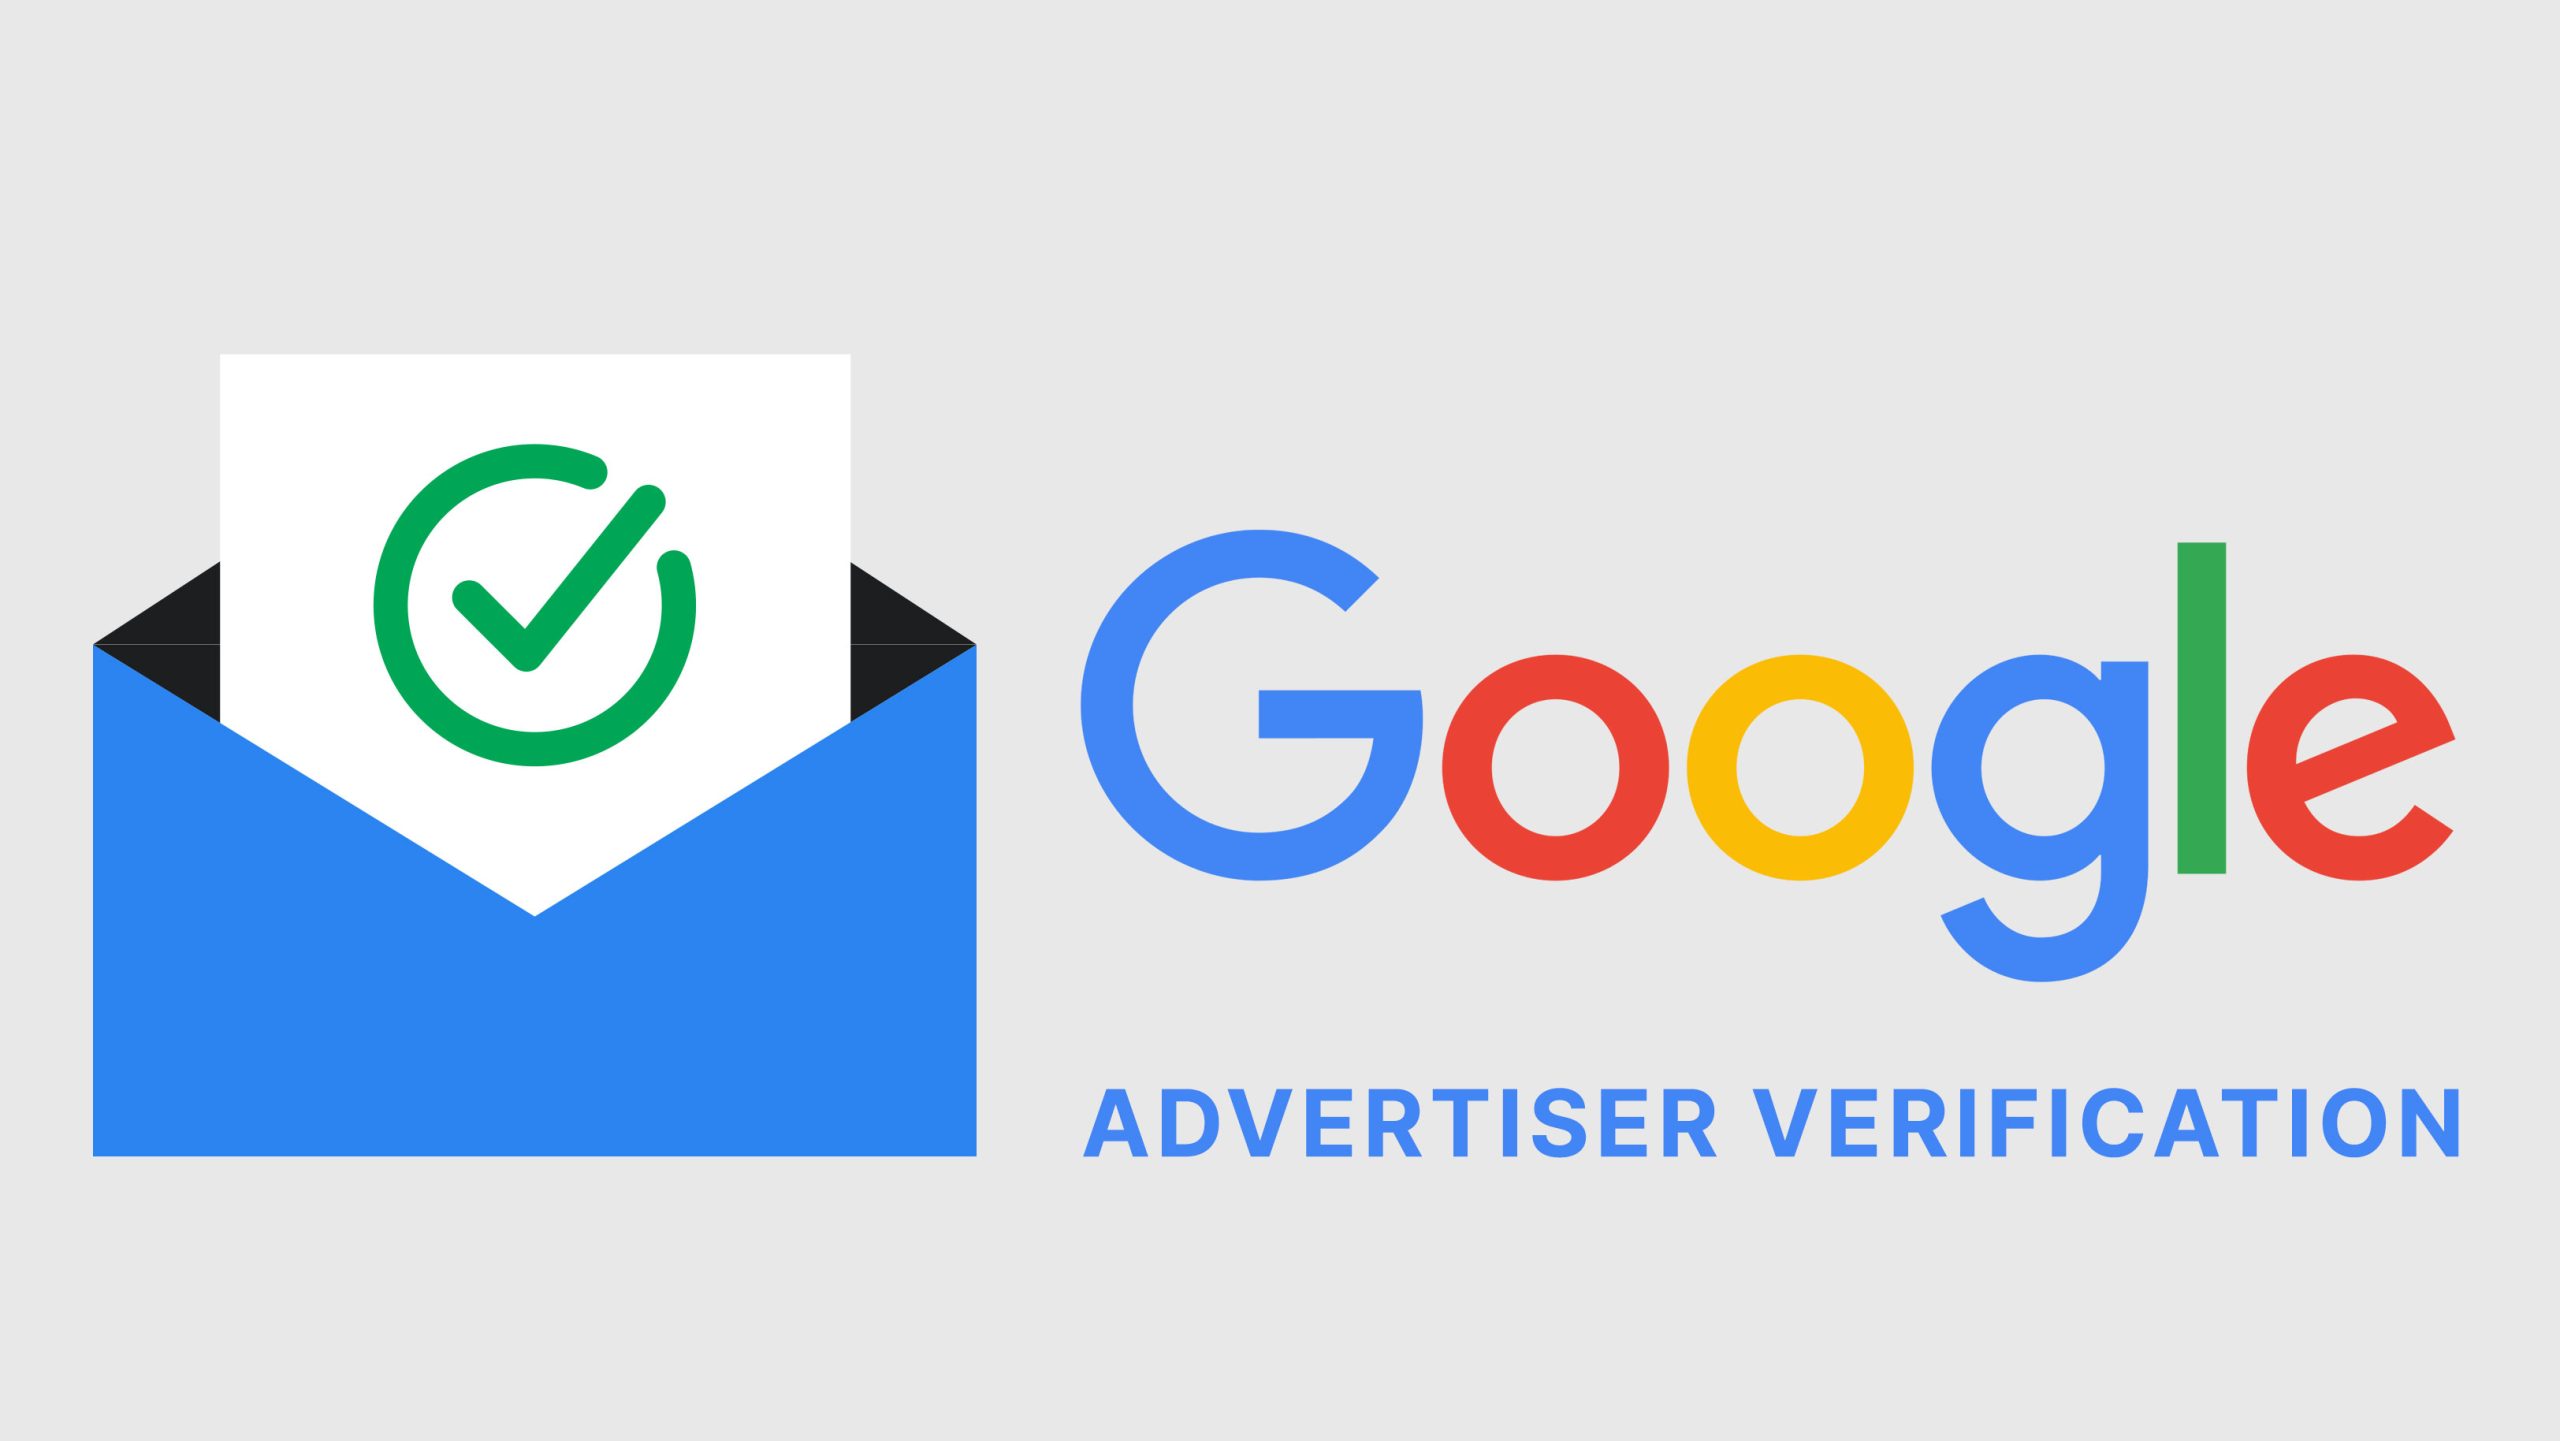 Google advertiser verification